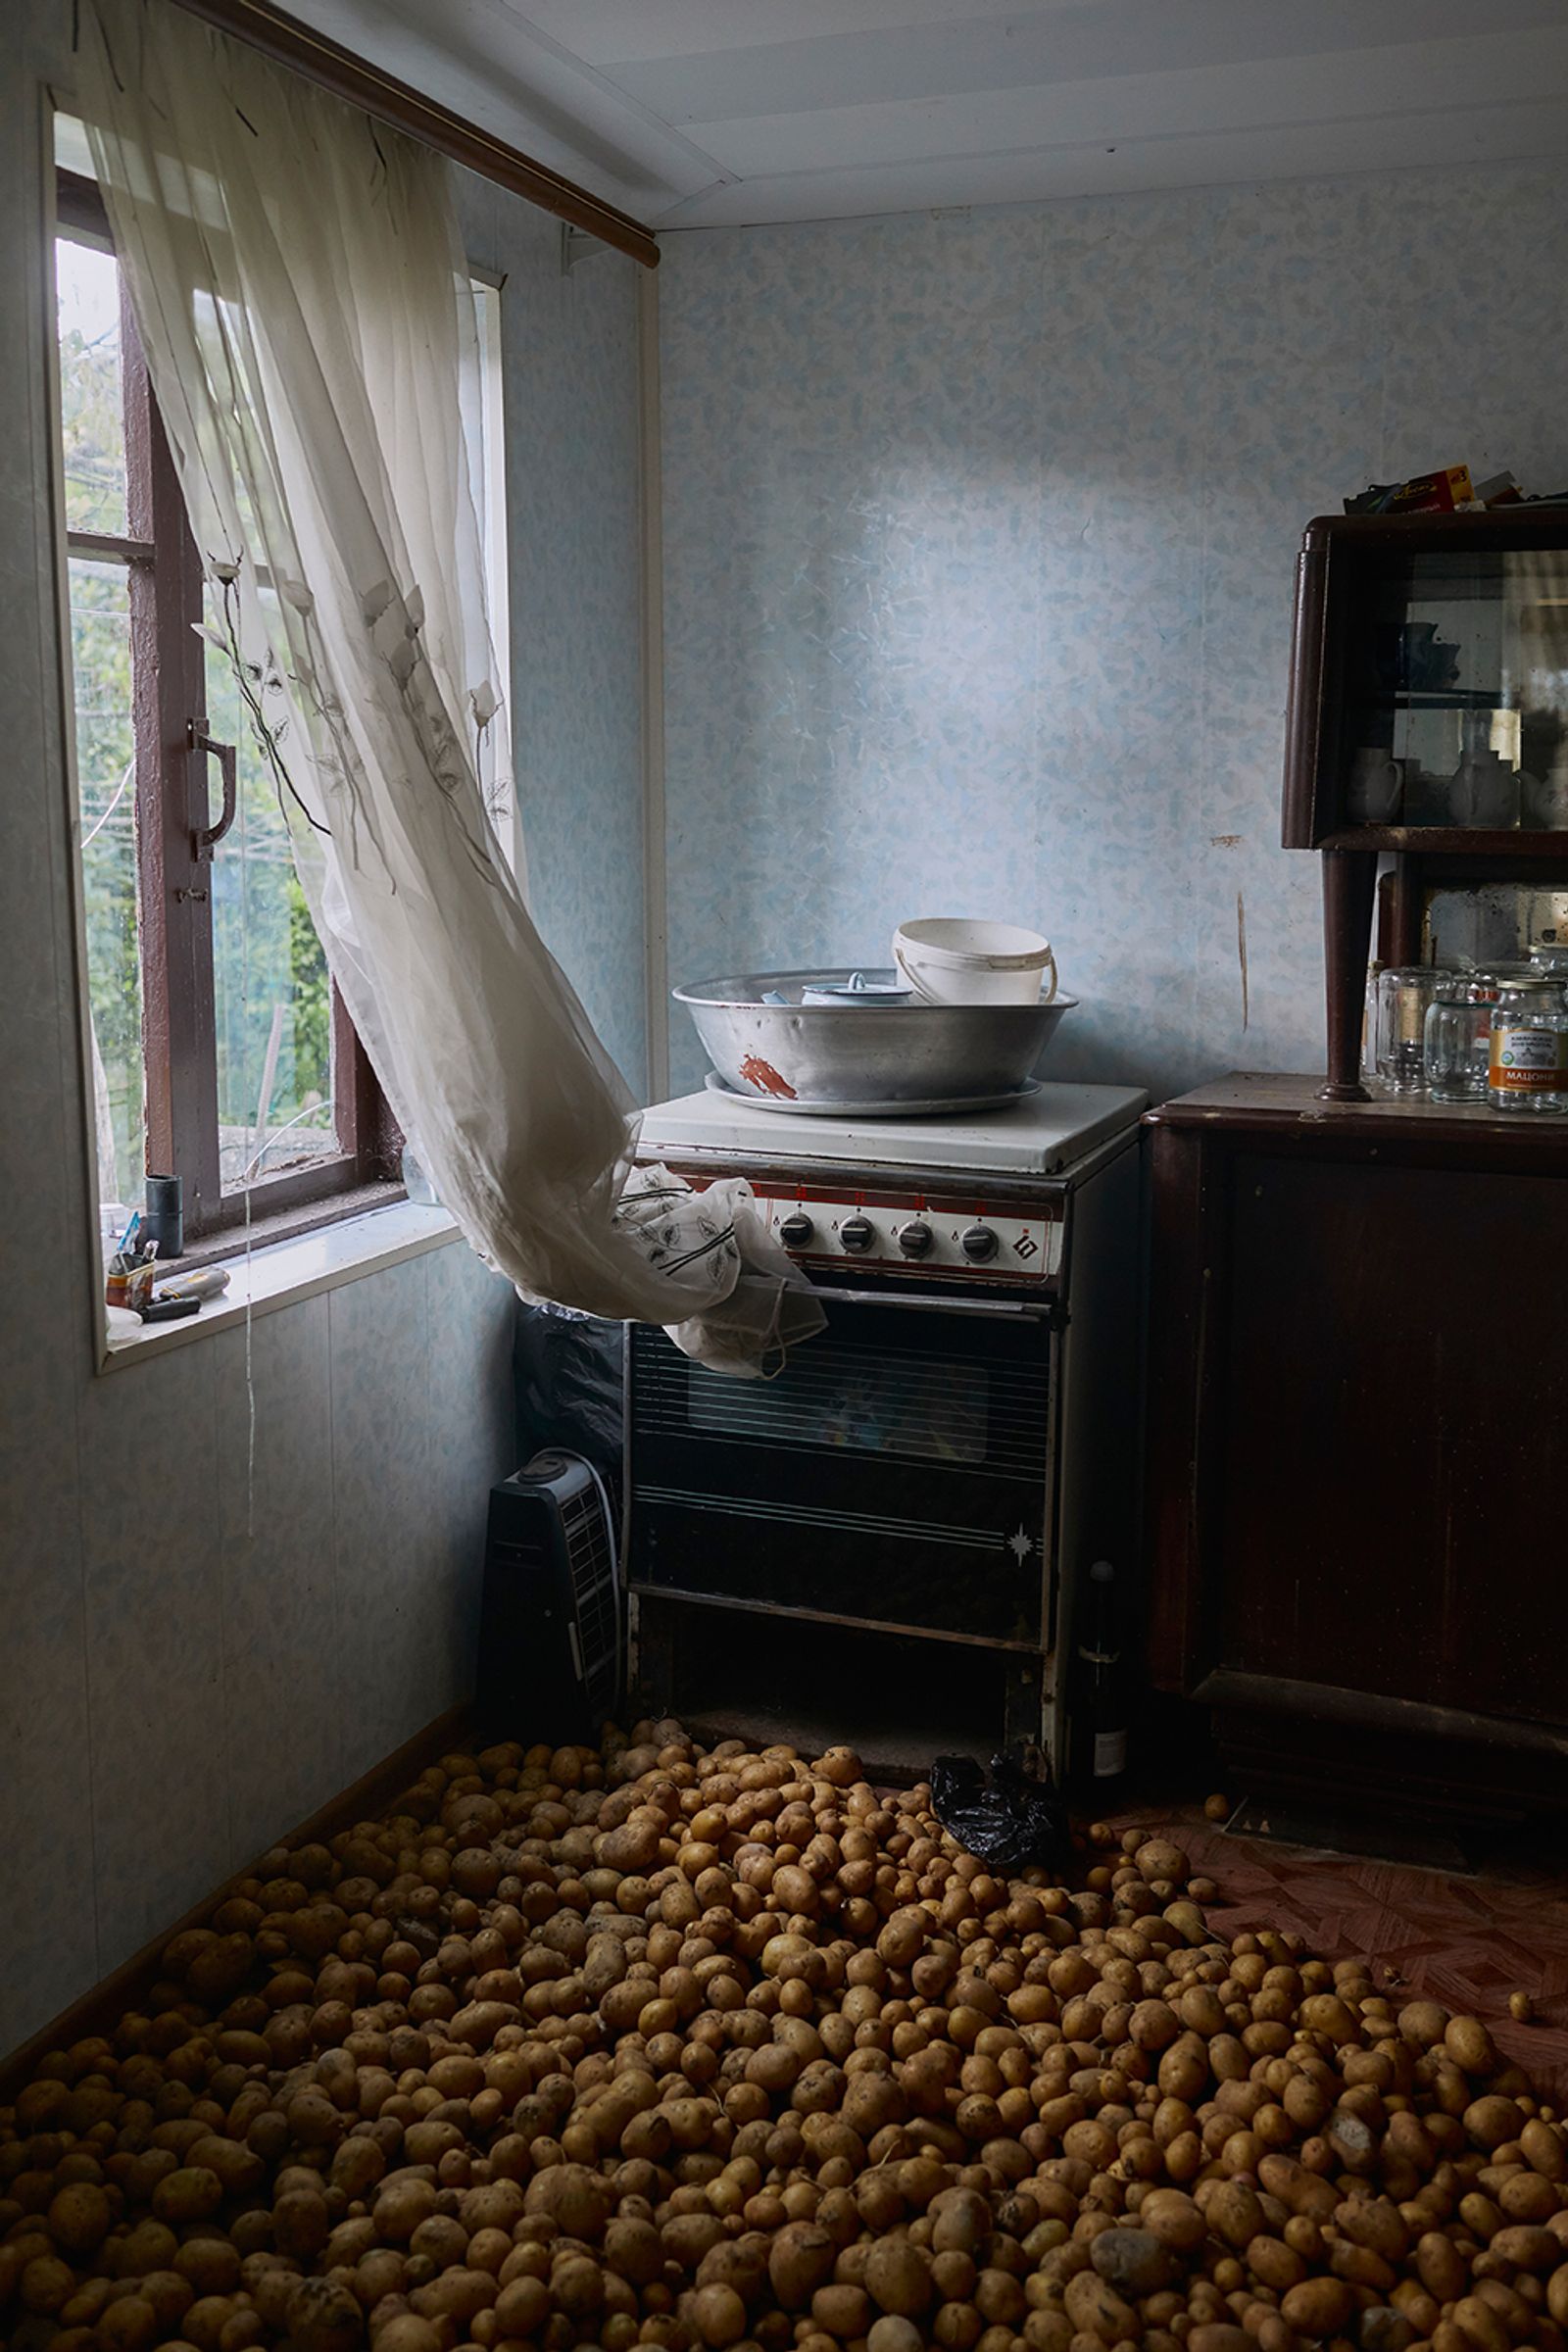 © Ksenia Kuleshova - Abkhazia, Eshera, 07/07/2017. Potatoes are stored on a floor in order for them to stay dry.